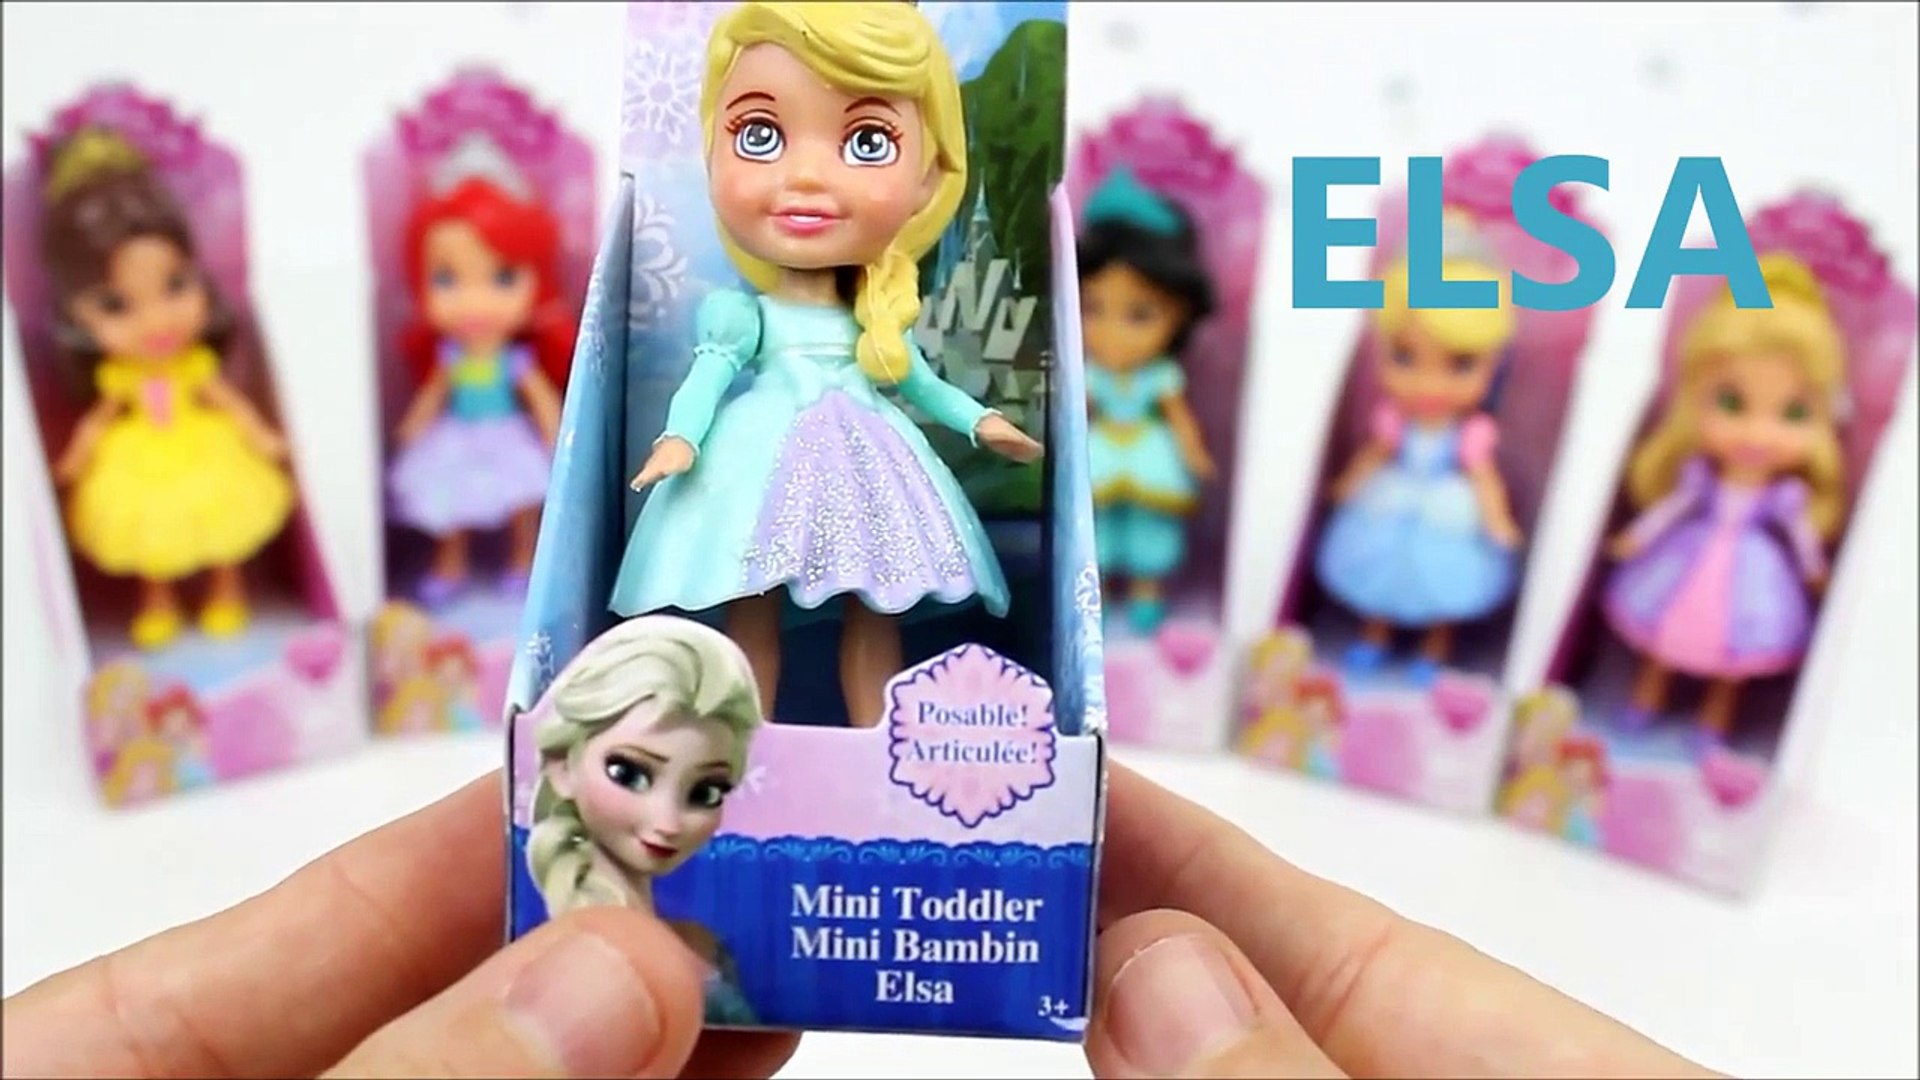 Mini poupée Princesse Disney - Belle